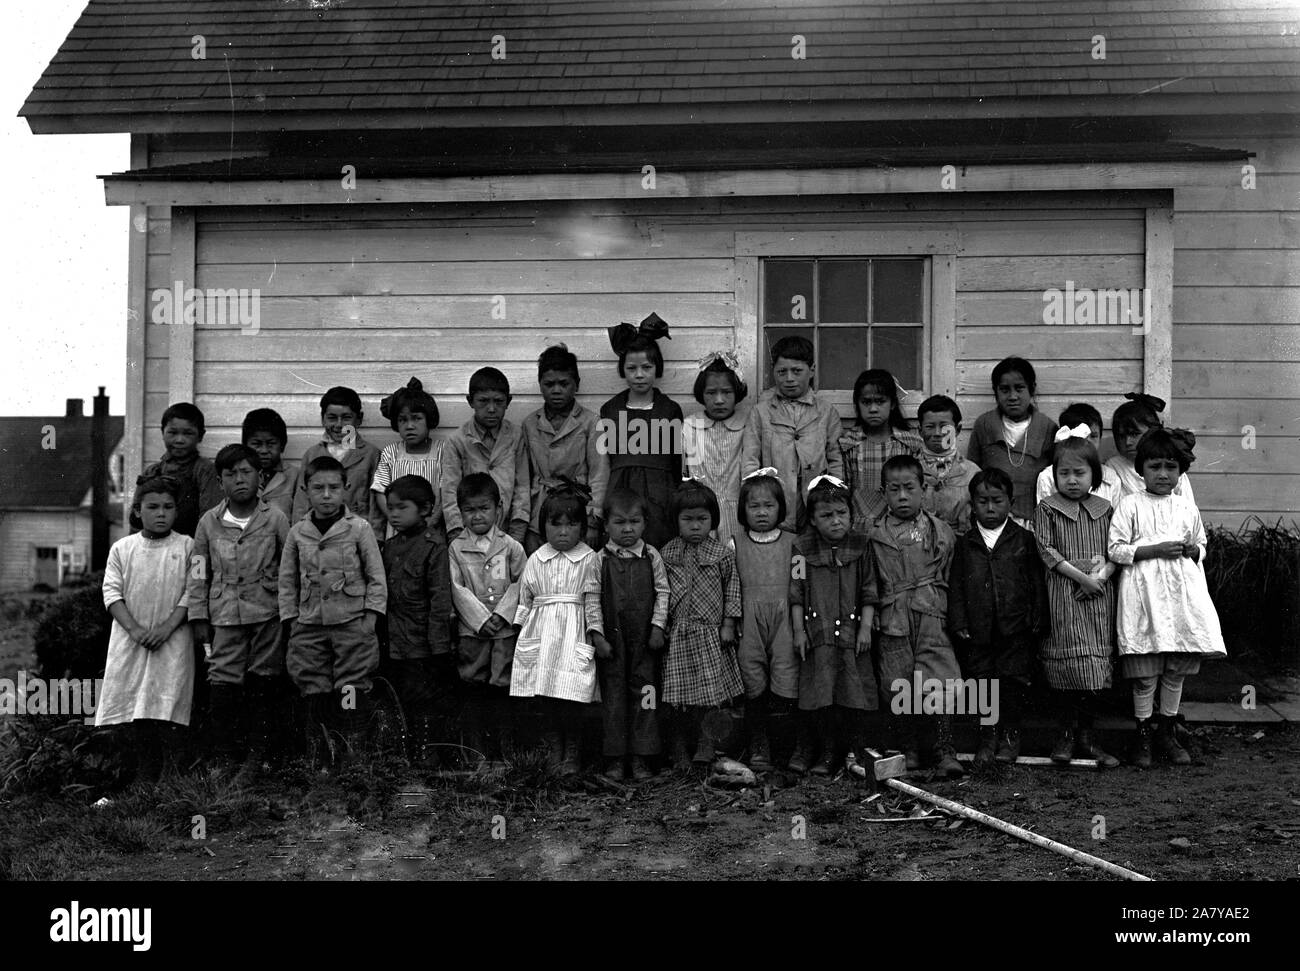 Public schools 1920 Black and White Stock Photos & Images - Alamy